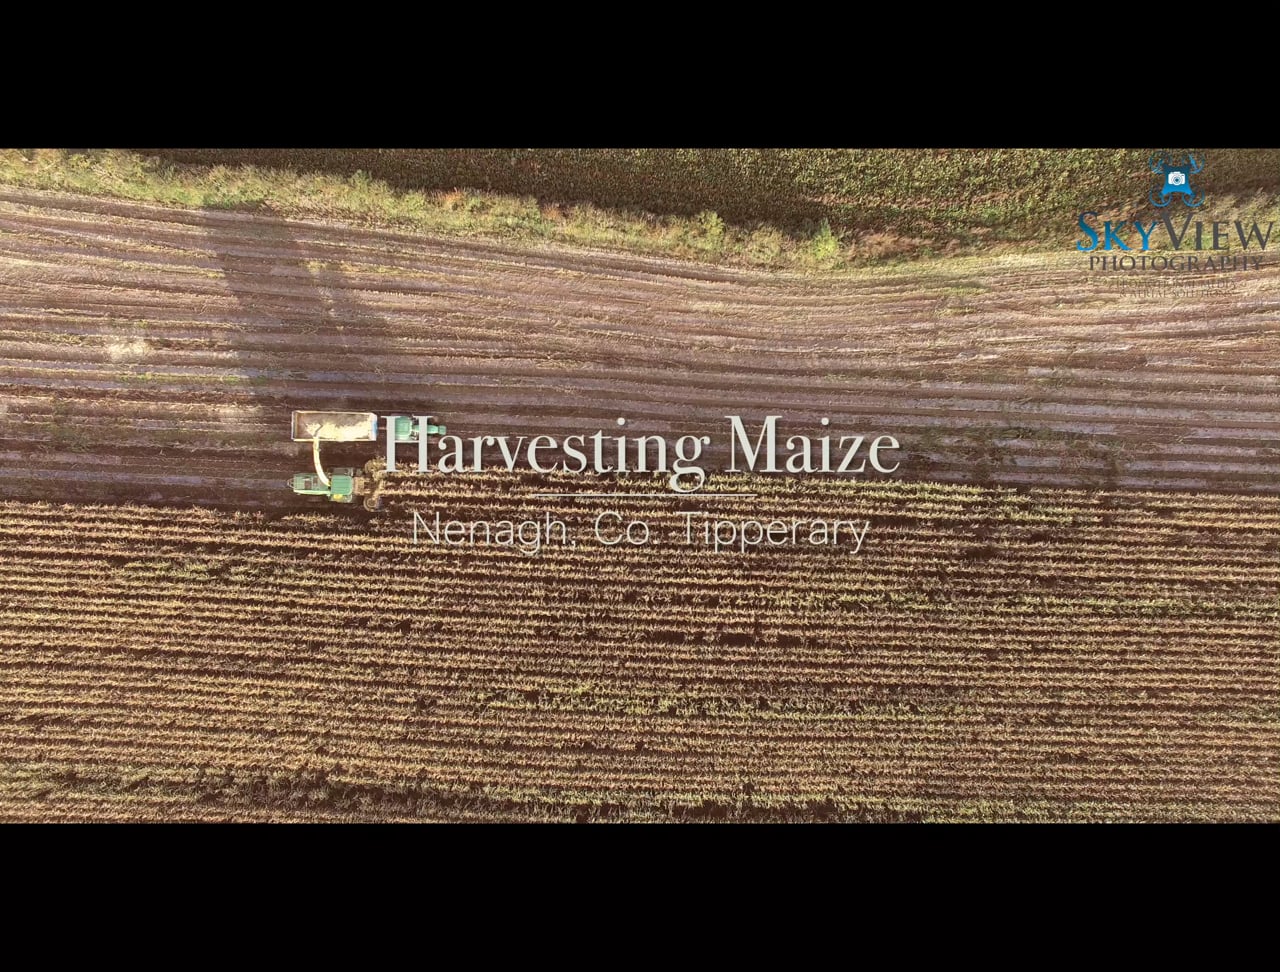 Harvesting Maize